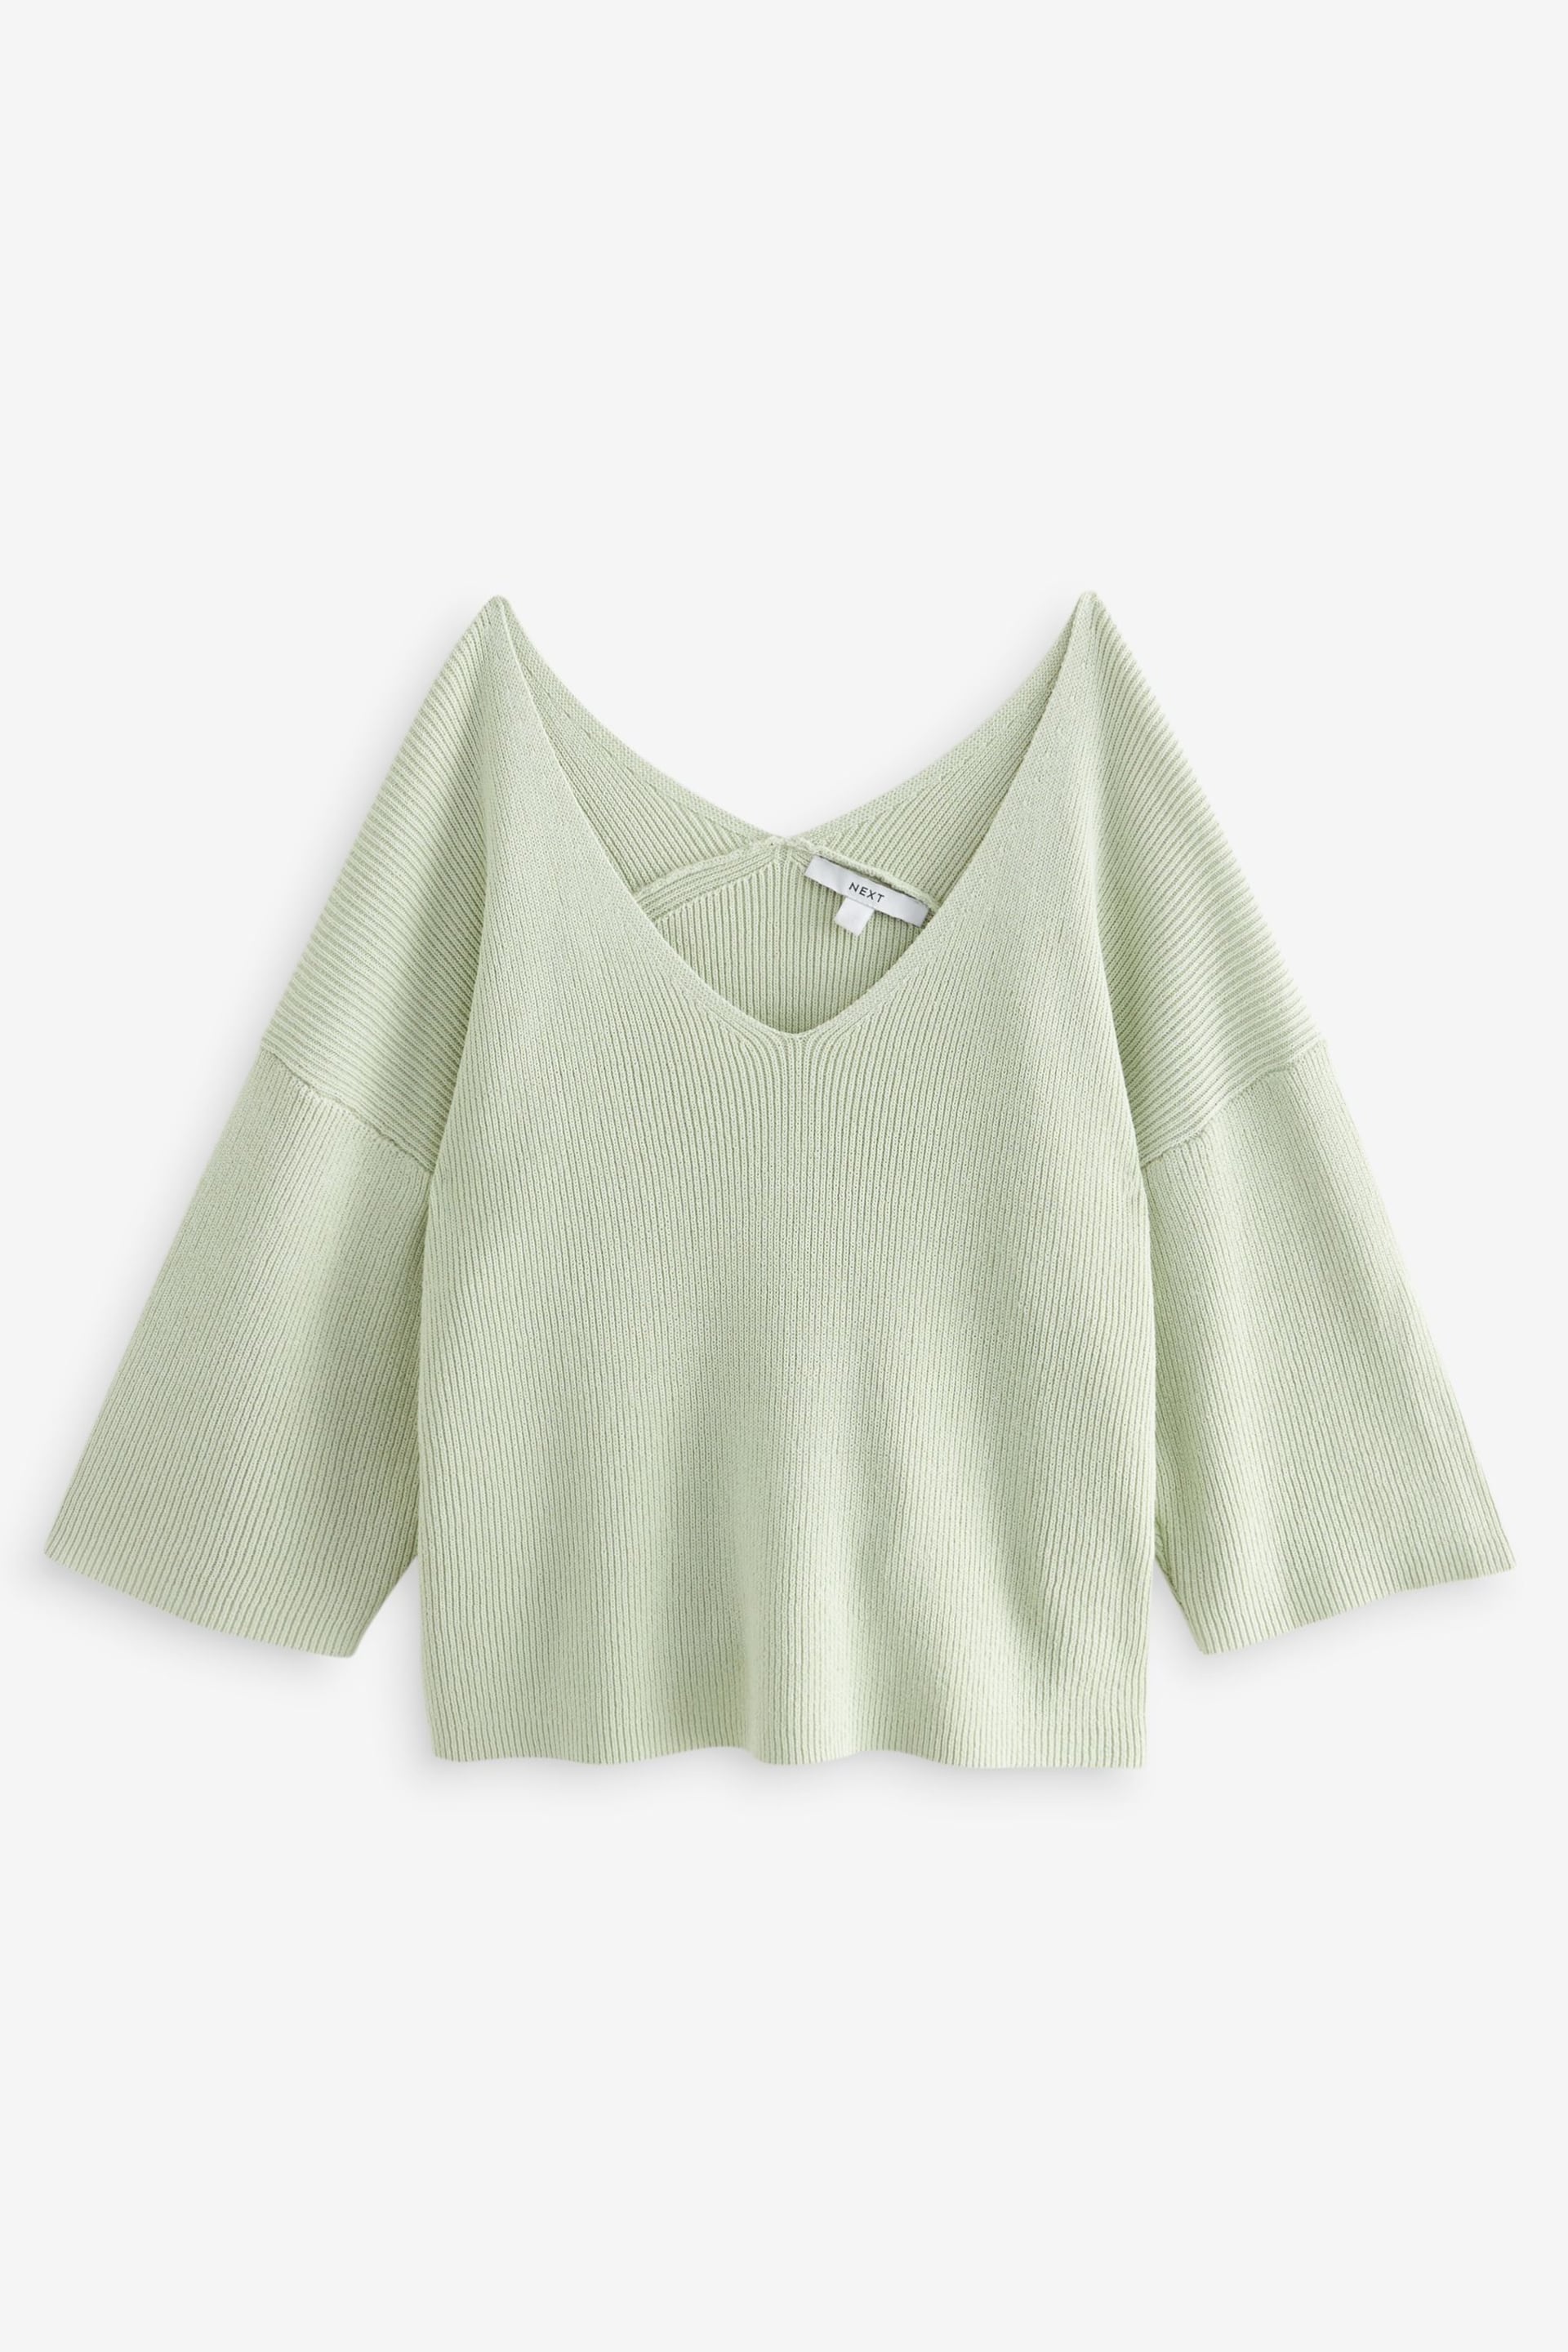 Mint Green V-Neck Linen Short Sleeve Top - Image 5 of 6